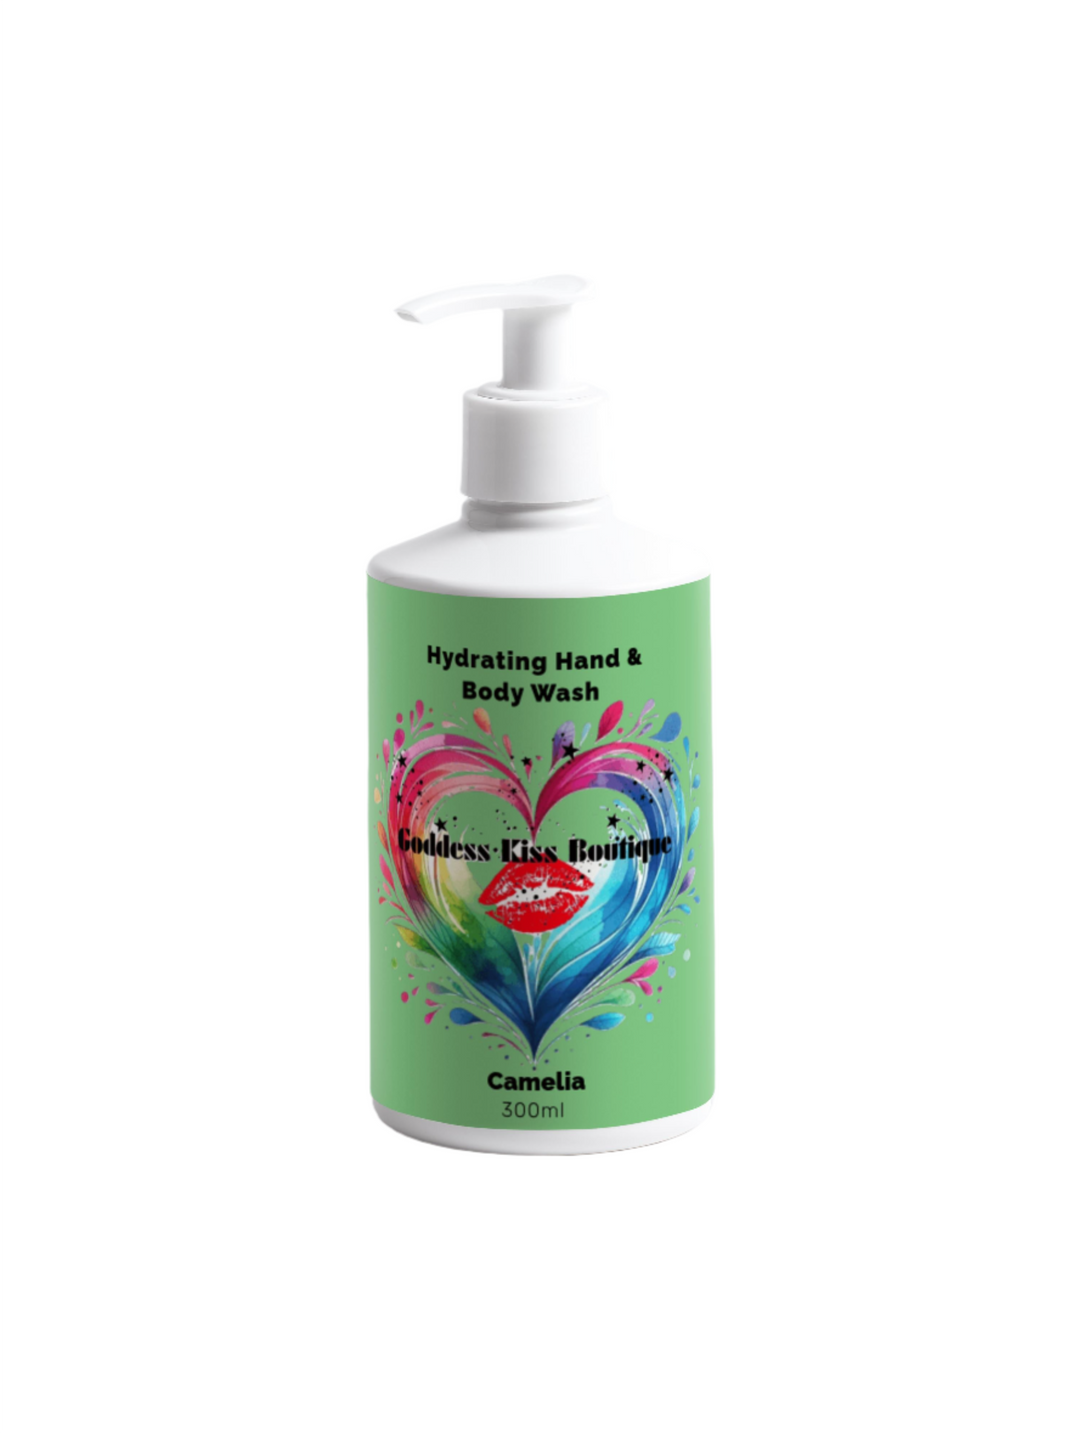 Hand & Body Wash, Camelia | Hydrating Vegan Cleanser